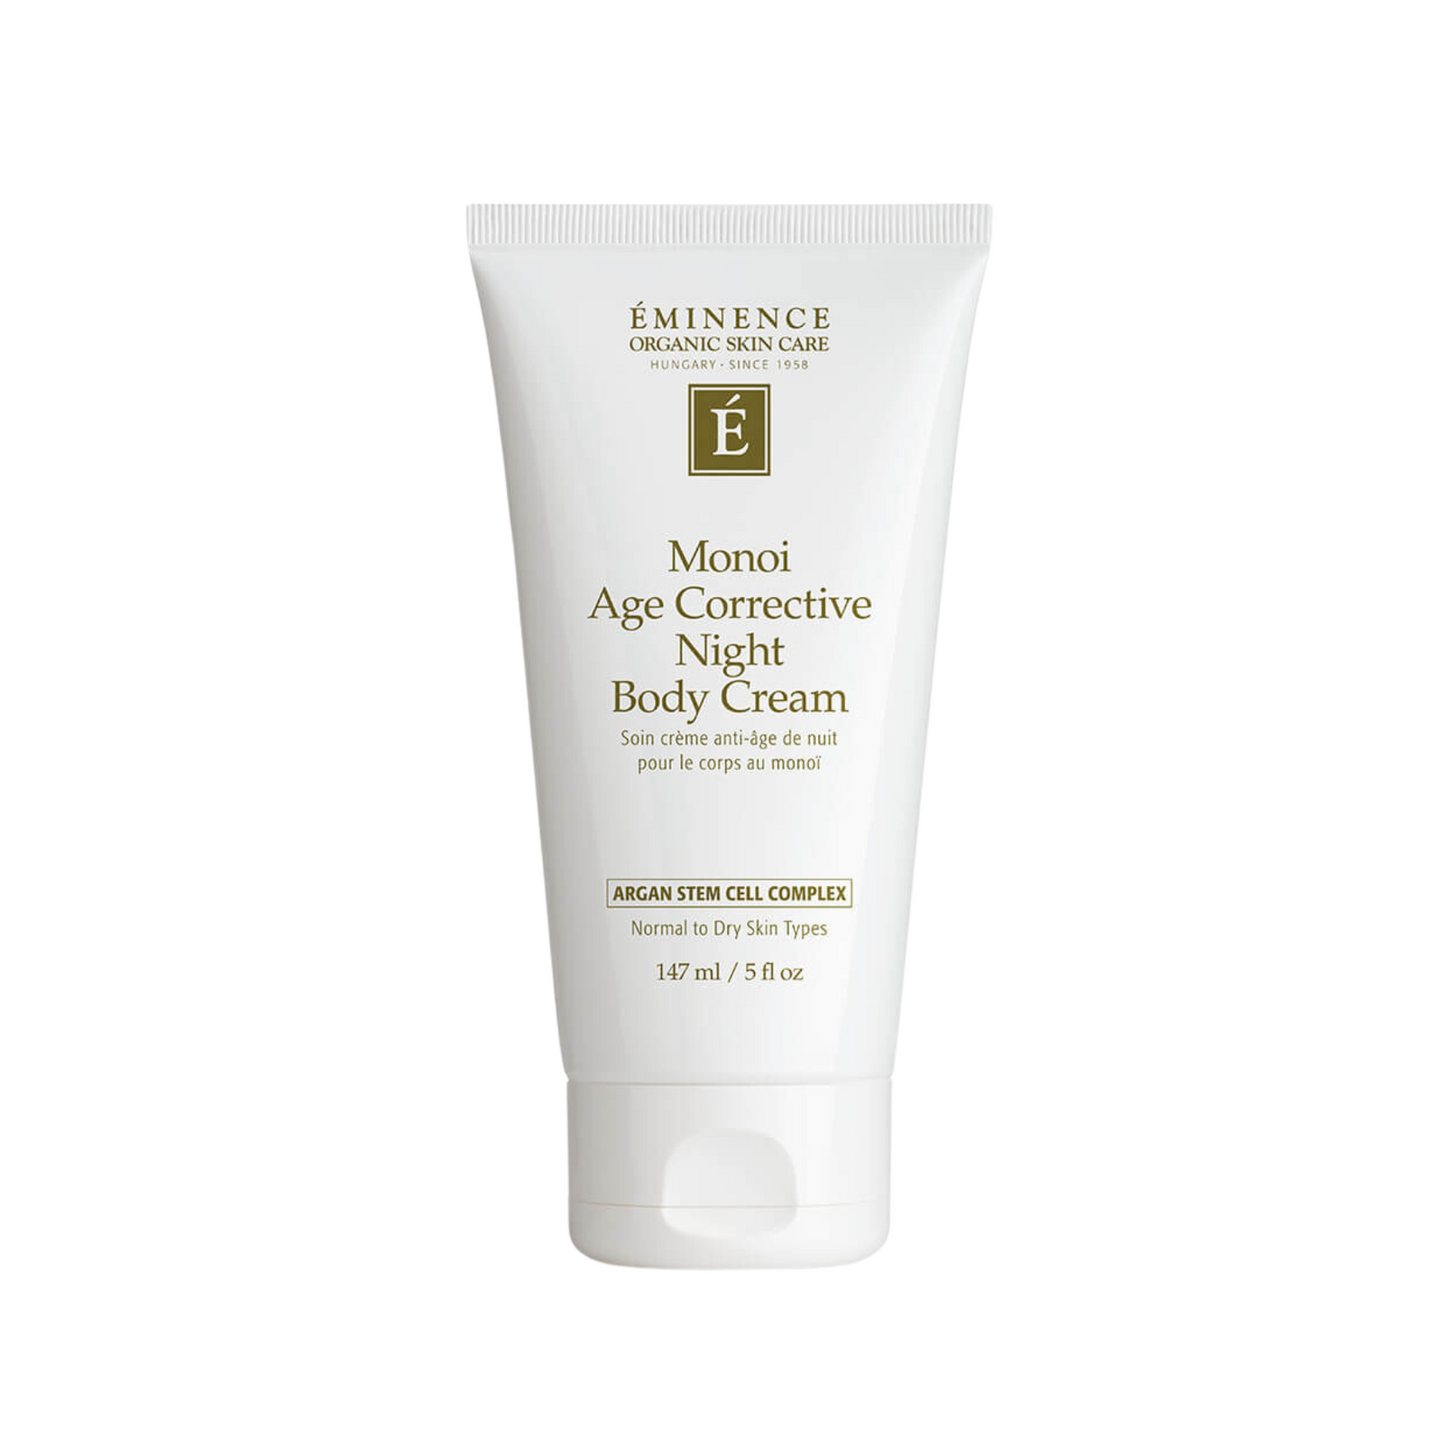 Monoi Age Corrective Night Body Cream - Eminence Organic Skin Care